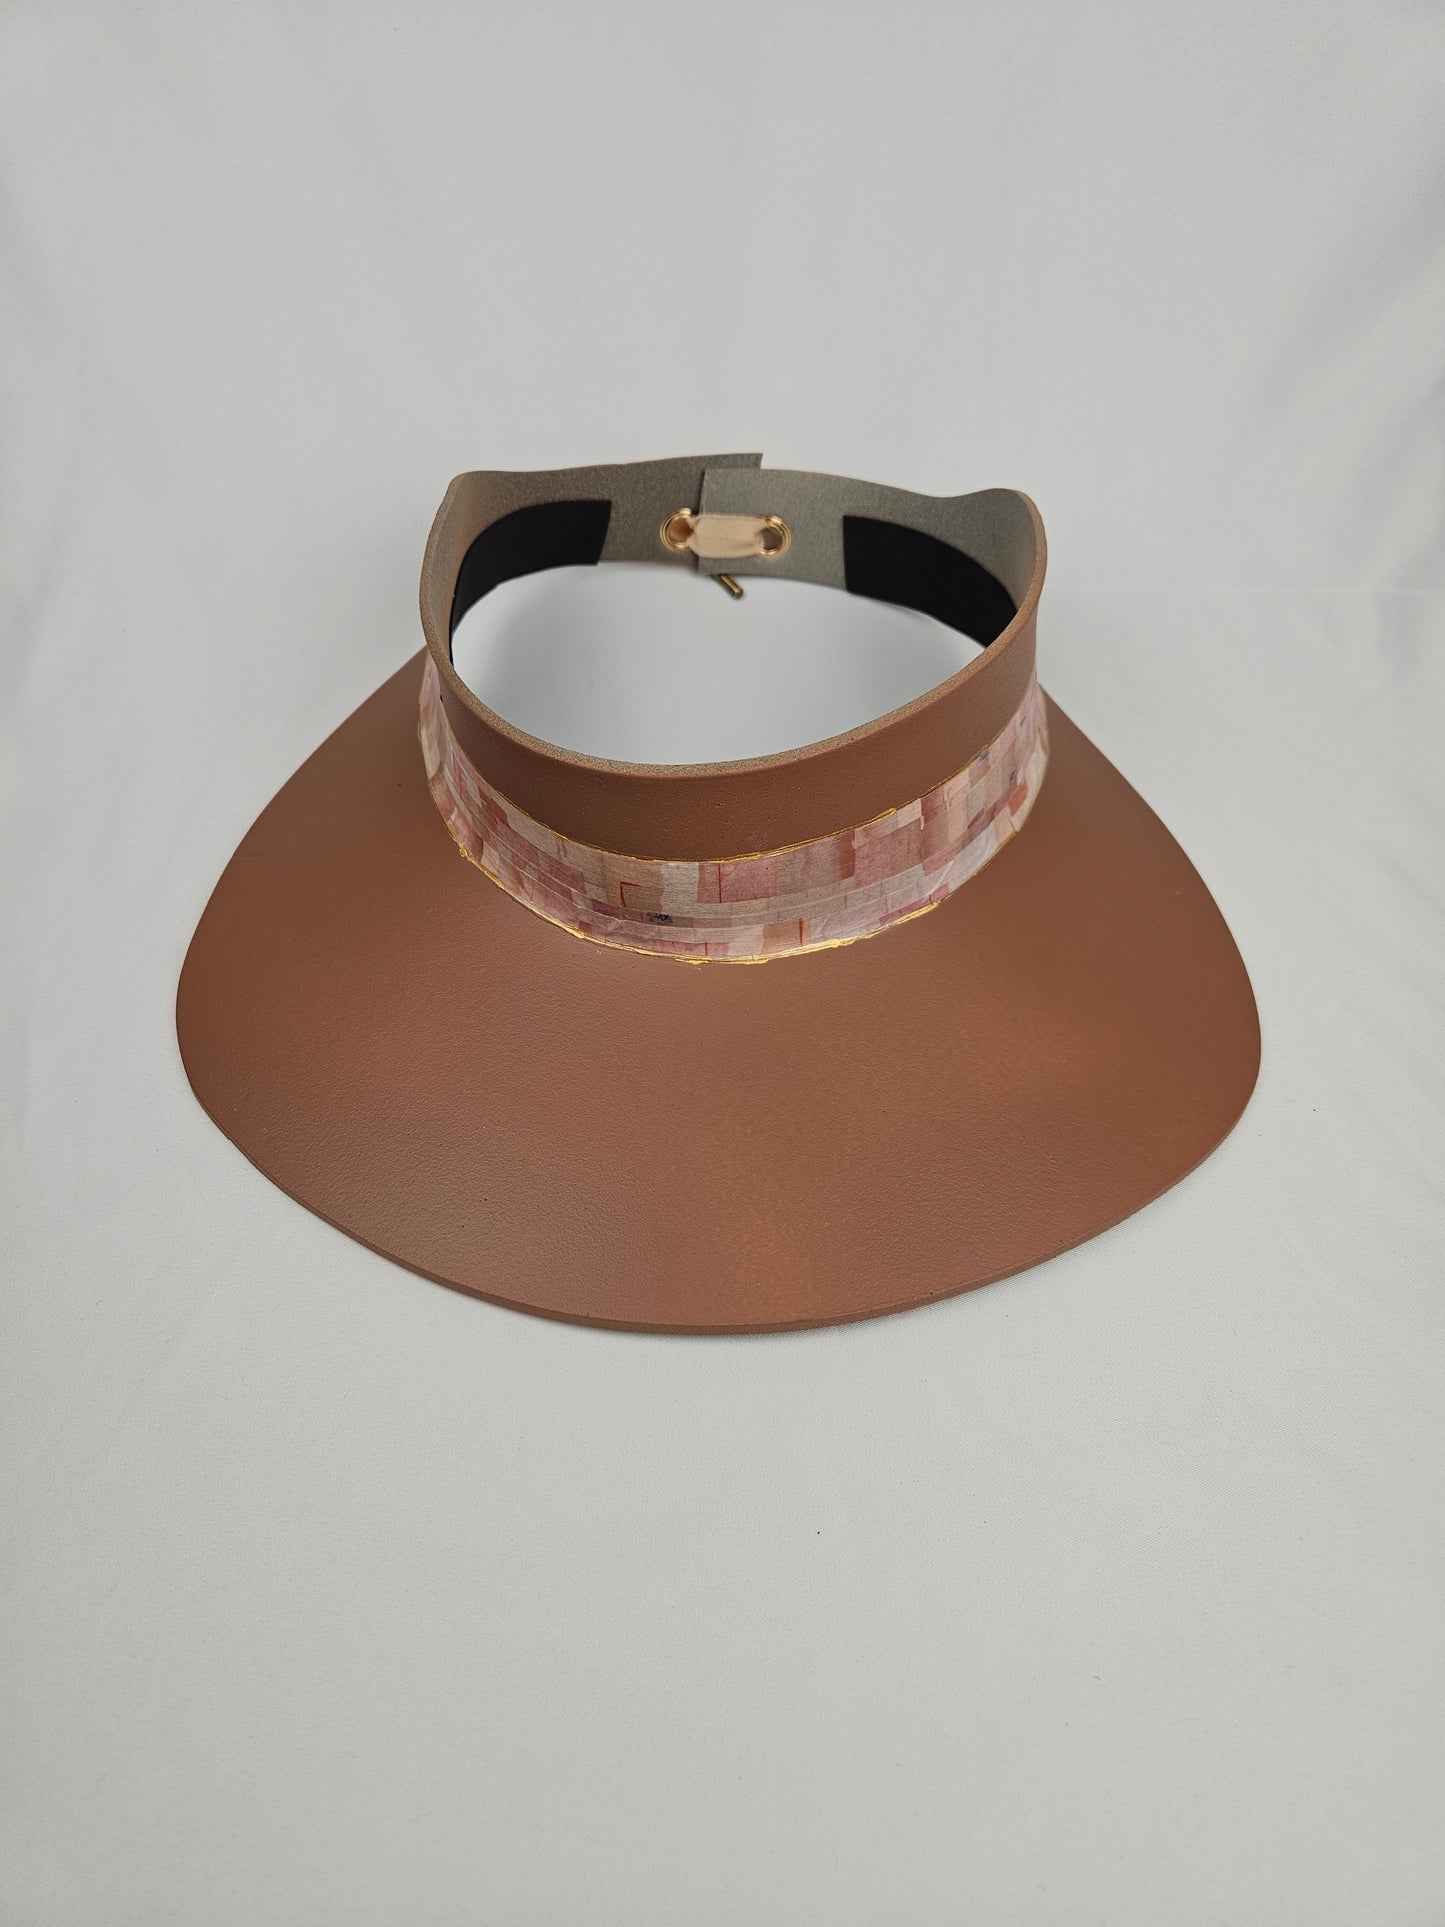 Tall Caramel Brown Audrey Sun Visor Hat with Stylish Pale Pink Collage Style Band: UV Resistant, Walks, 1950s, Brunch, Tea, Golf, Wedding, Church, No Headache, Easter, Pool, Beach, Big Brim